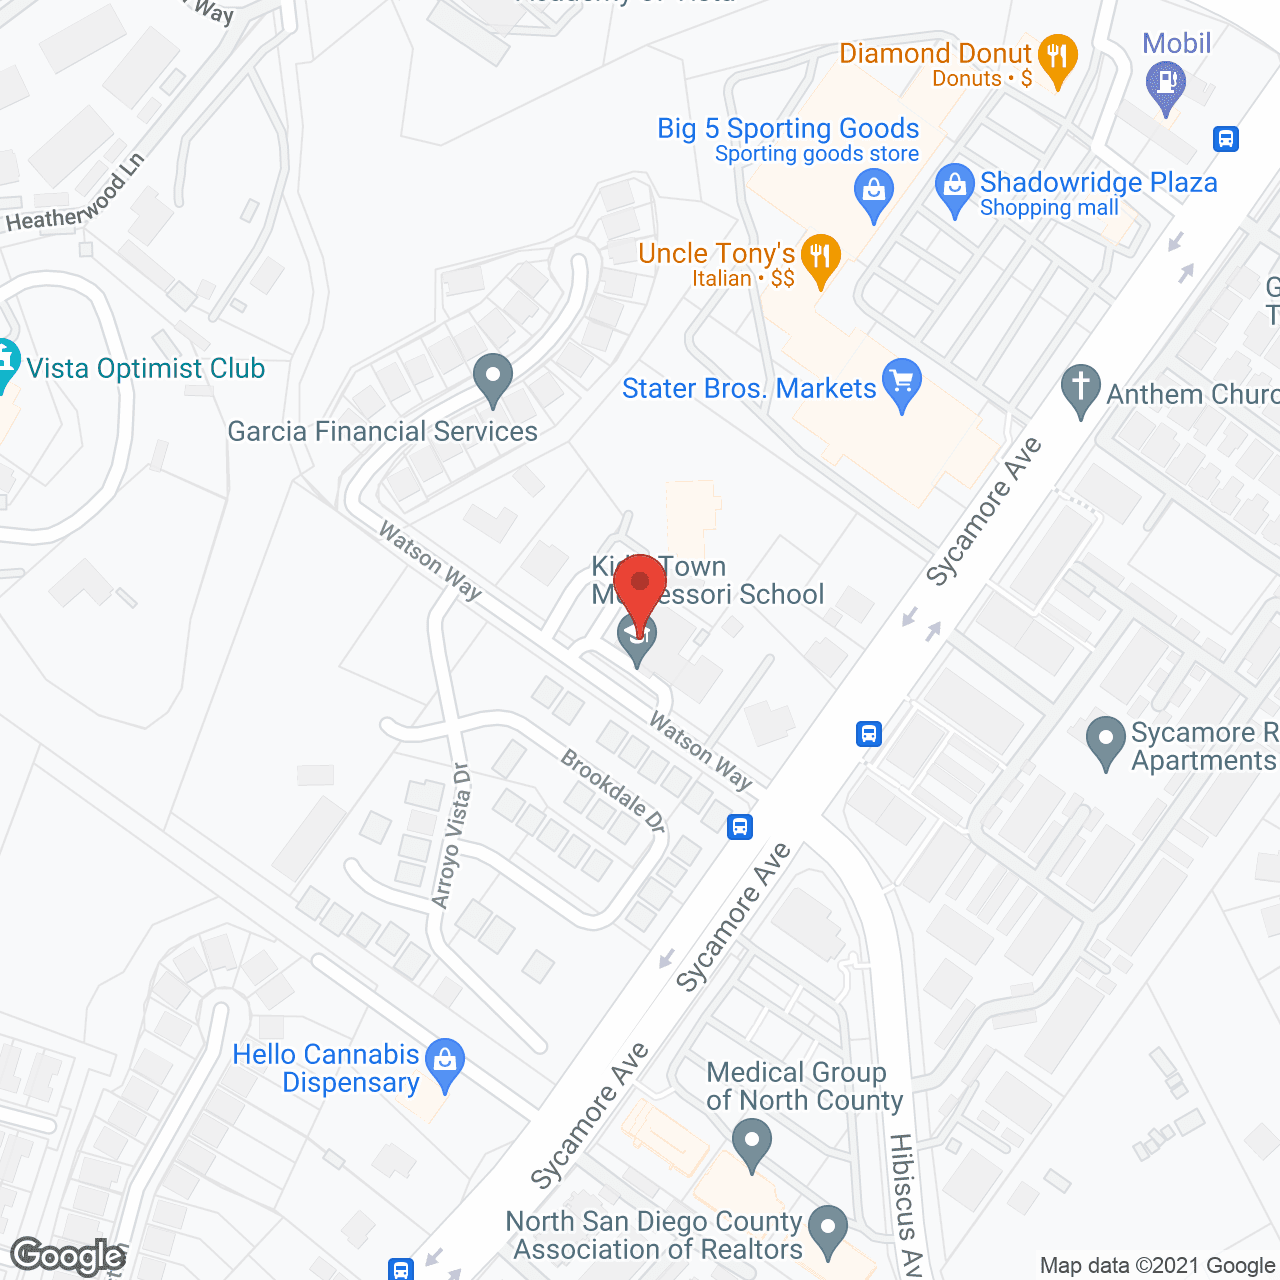 Shadowridge (Renovation Fall 2019) in google map